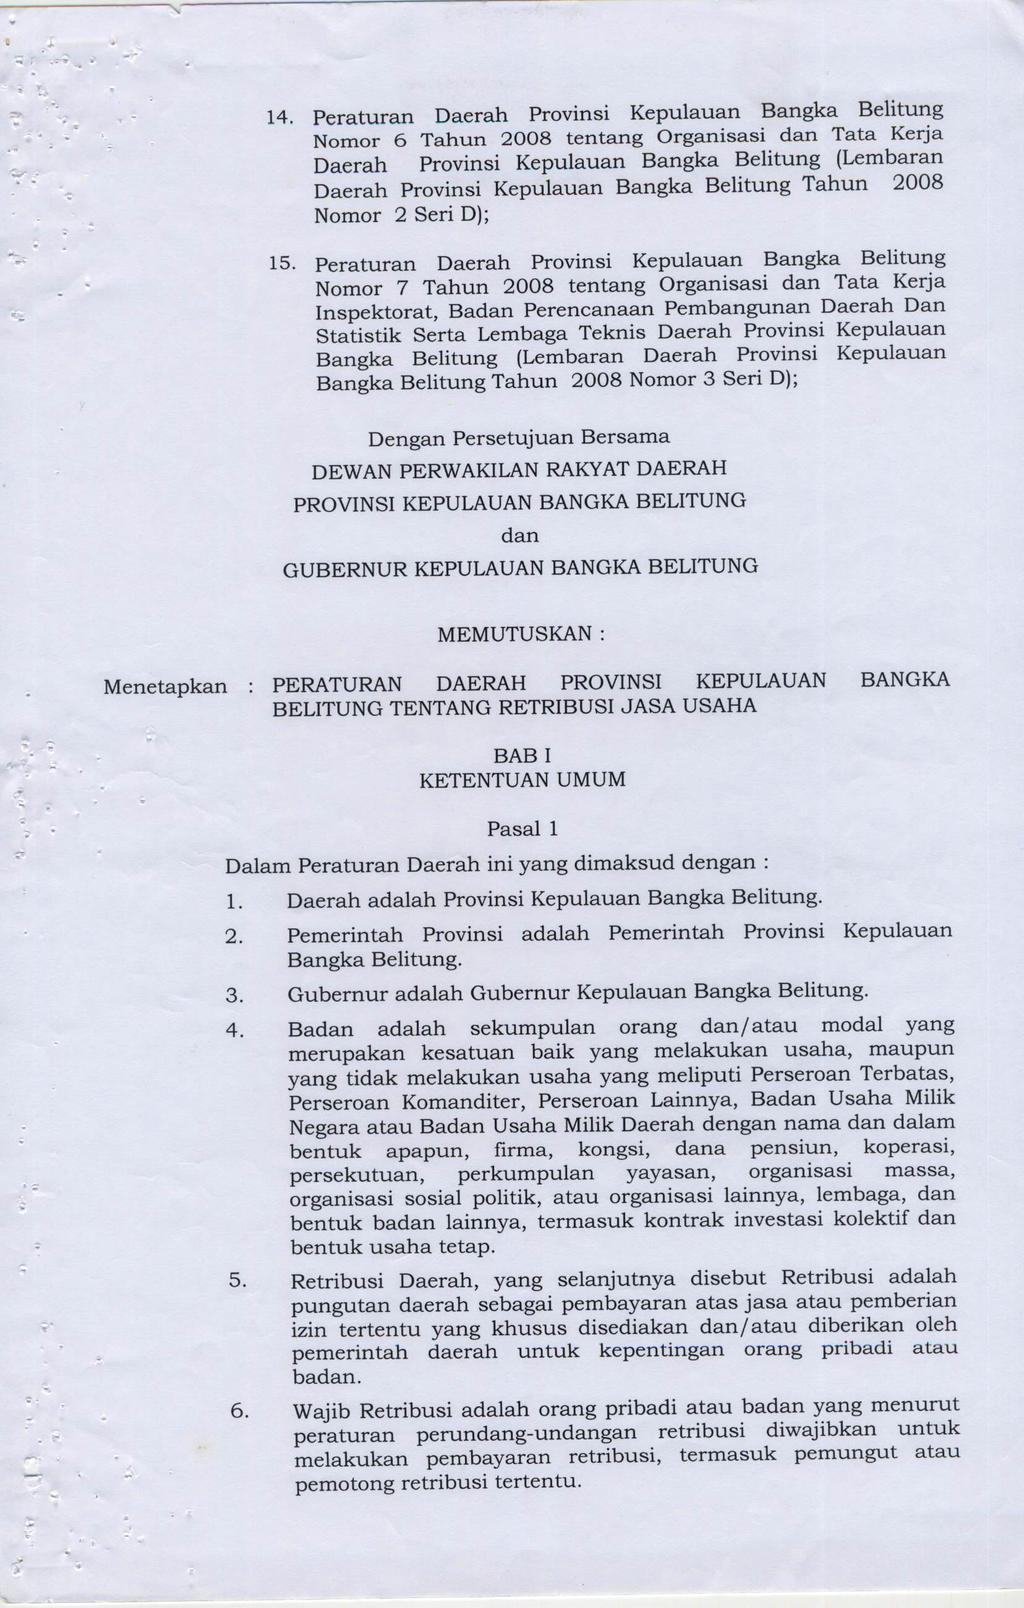 14. Peraturan Daerah Provinsi Kepulauan Bangka Belitung Nomor 6 Tahun 2008 tentang Organisasi dan Tata Kerja Daerah Provinsi Kepulauan Bangka Belitung (Lembaran Daerah Provinsi Kepulauan Bangka